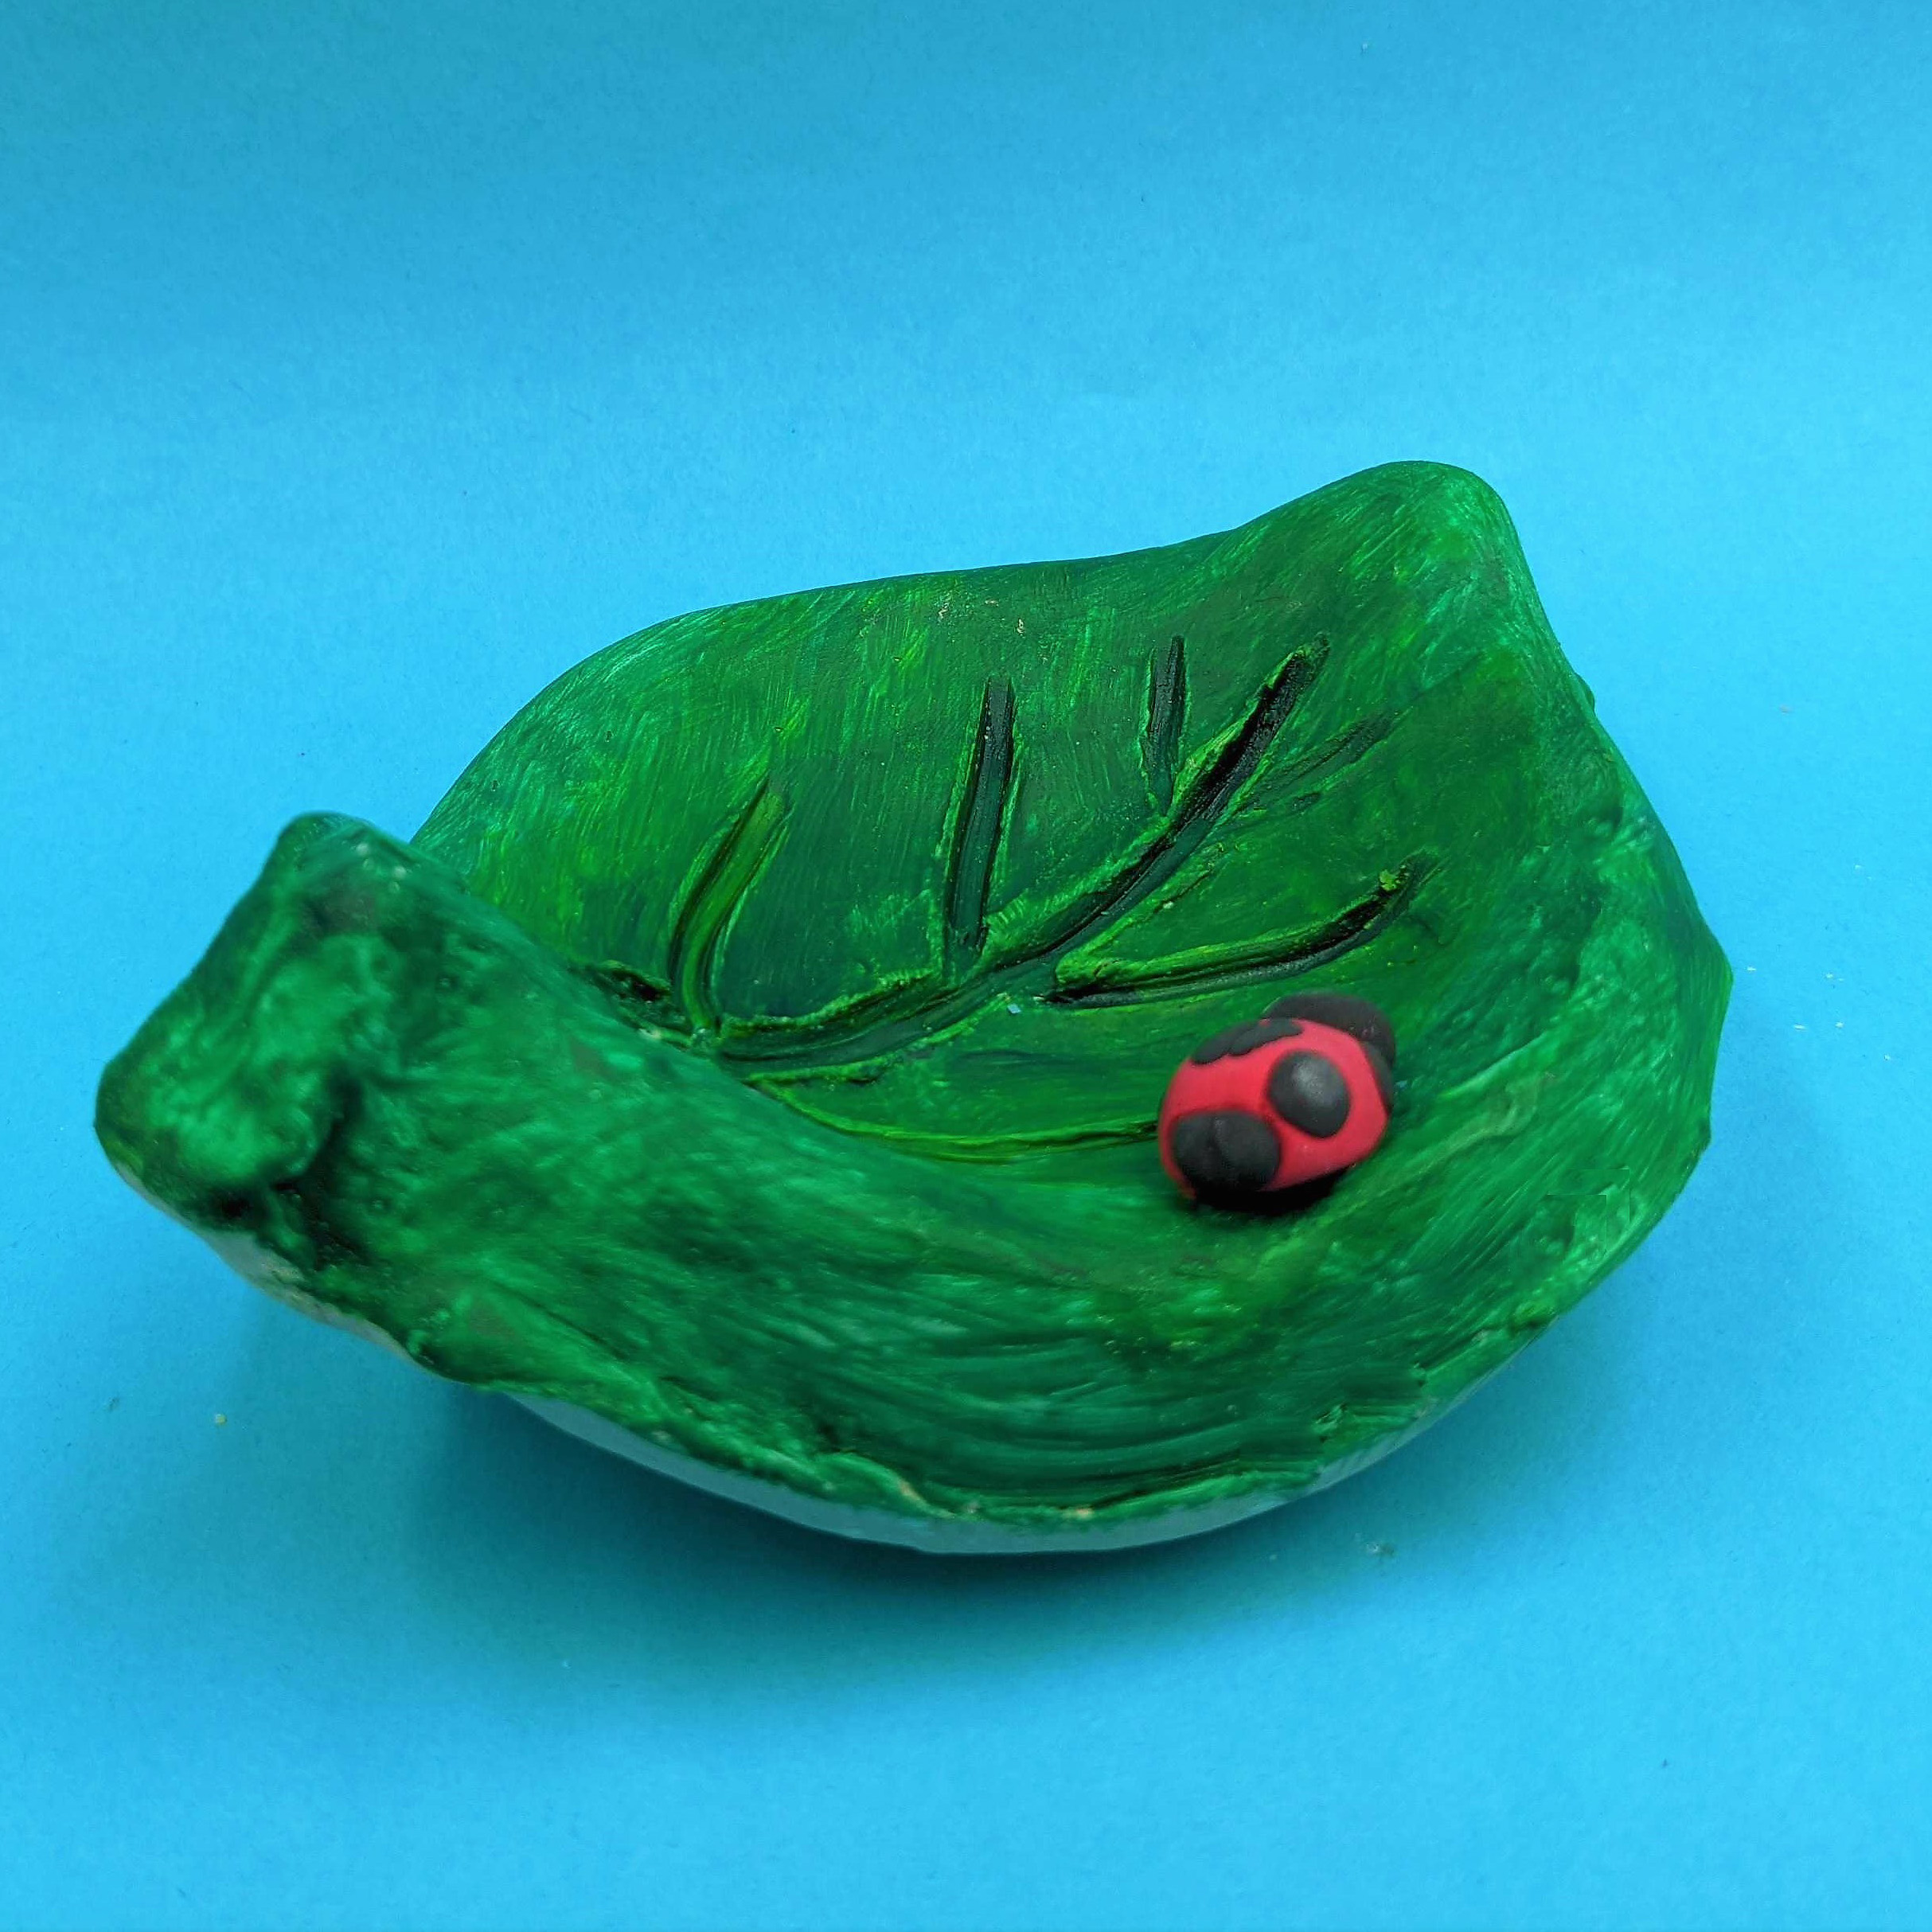 Kidcreate Studio - Eden Prairie, Leaf bowl Art Project